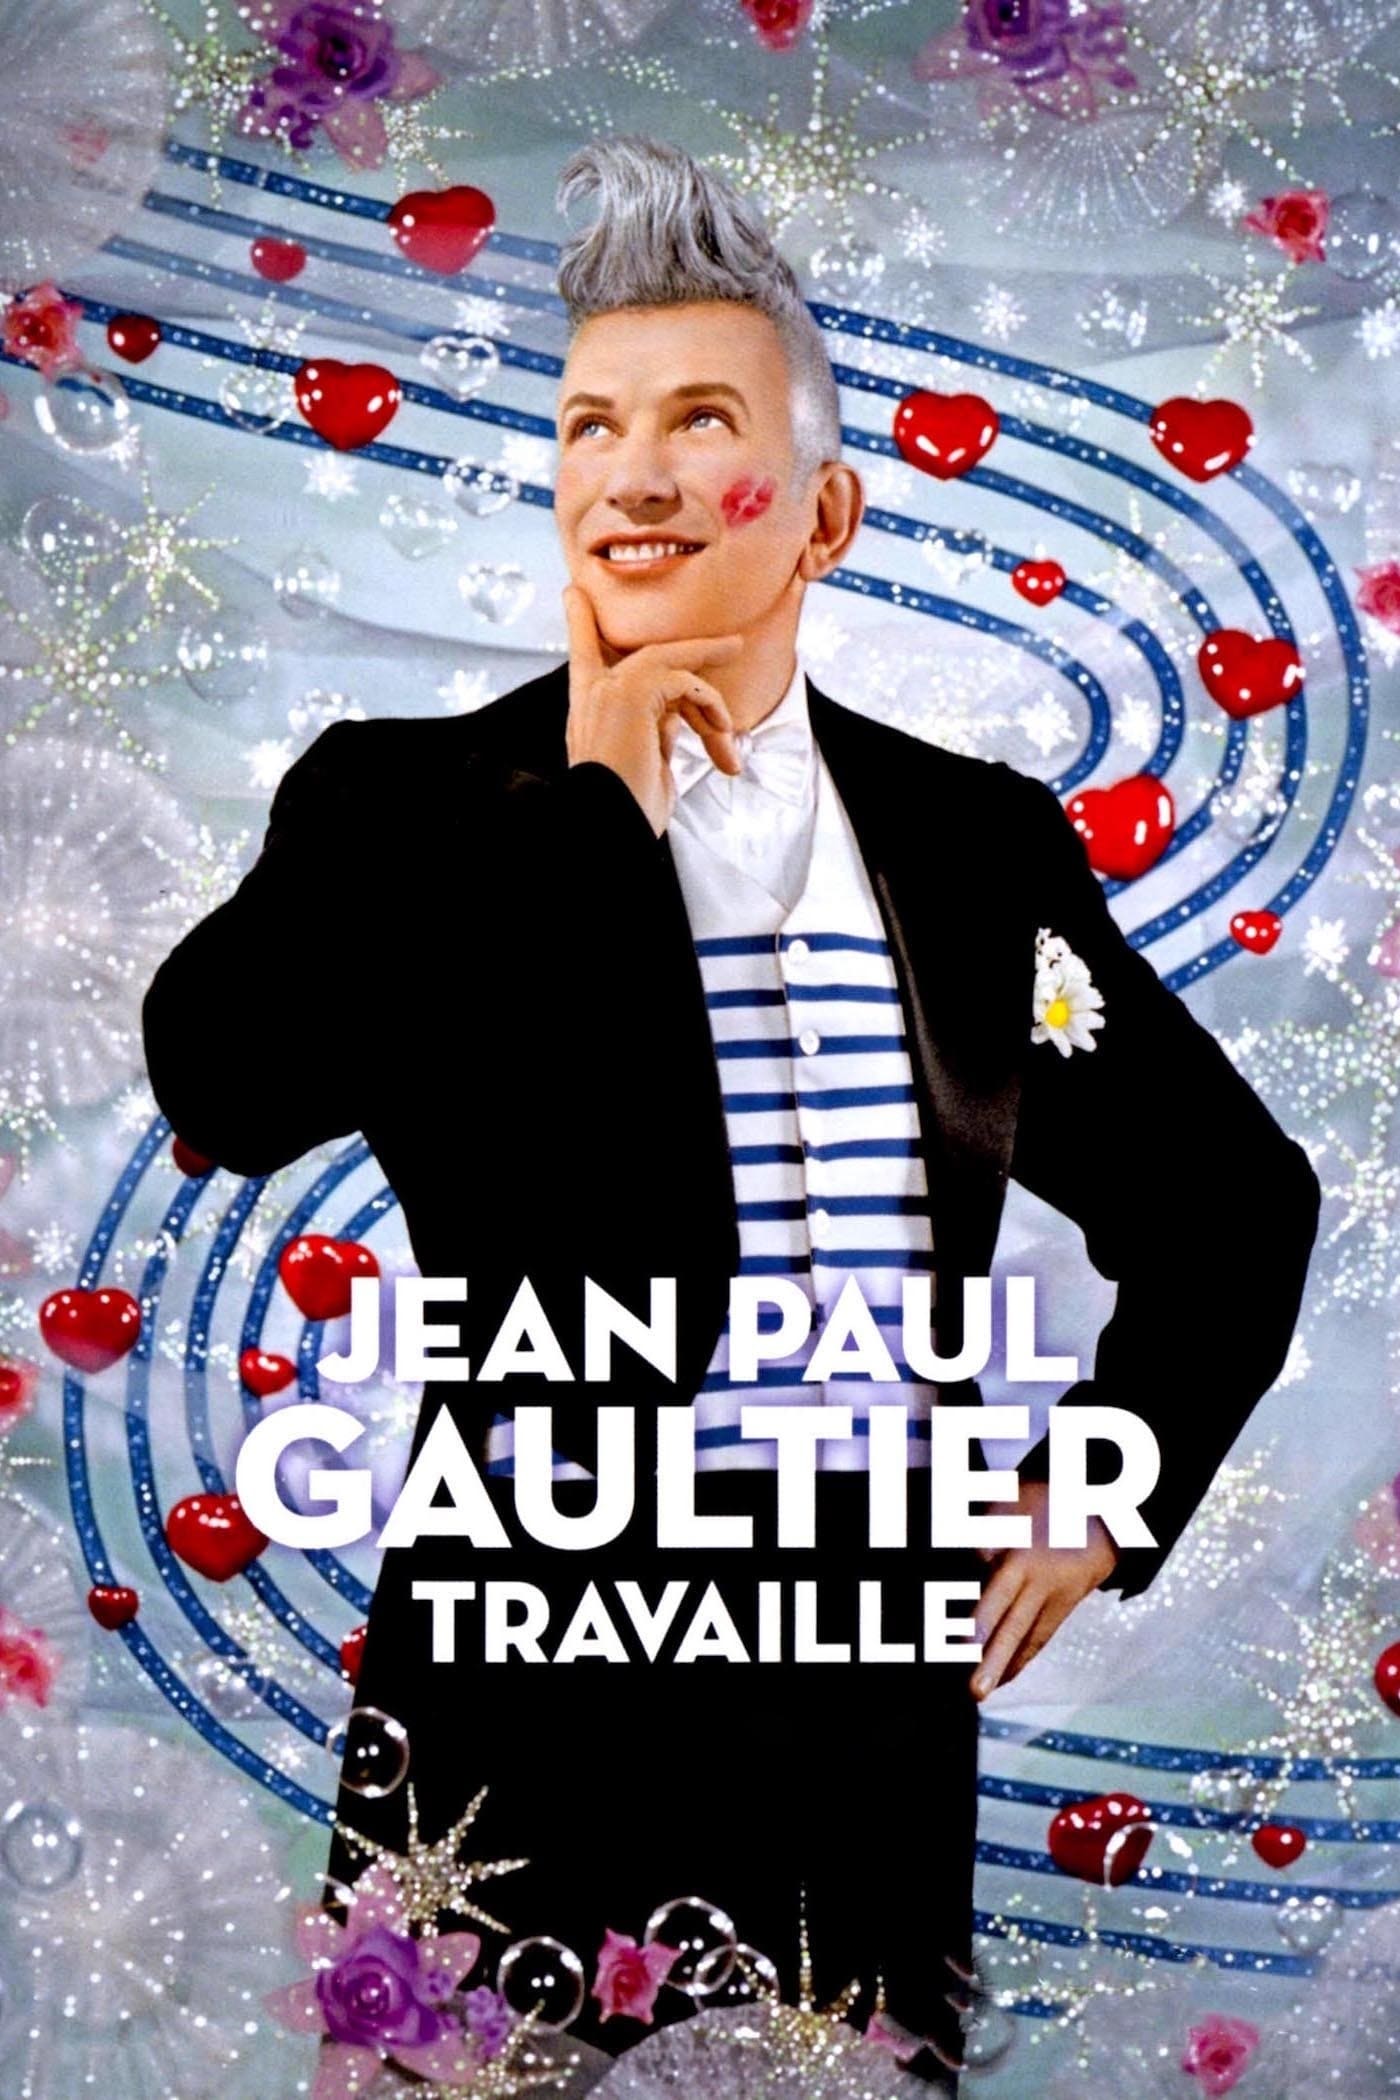 Jean-Paul Gaultier travaille